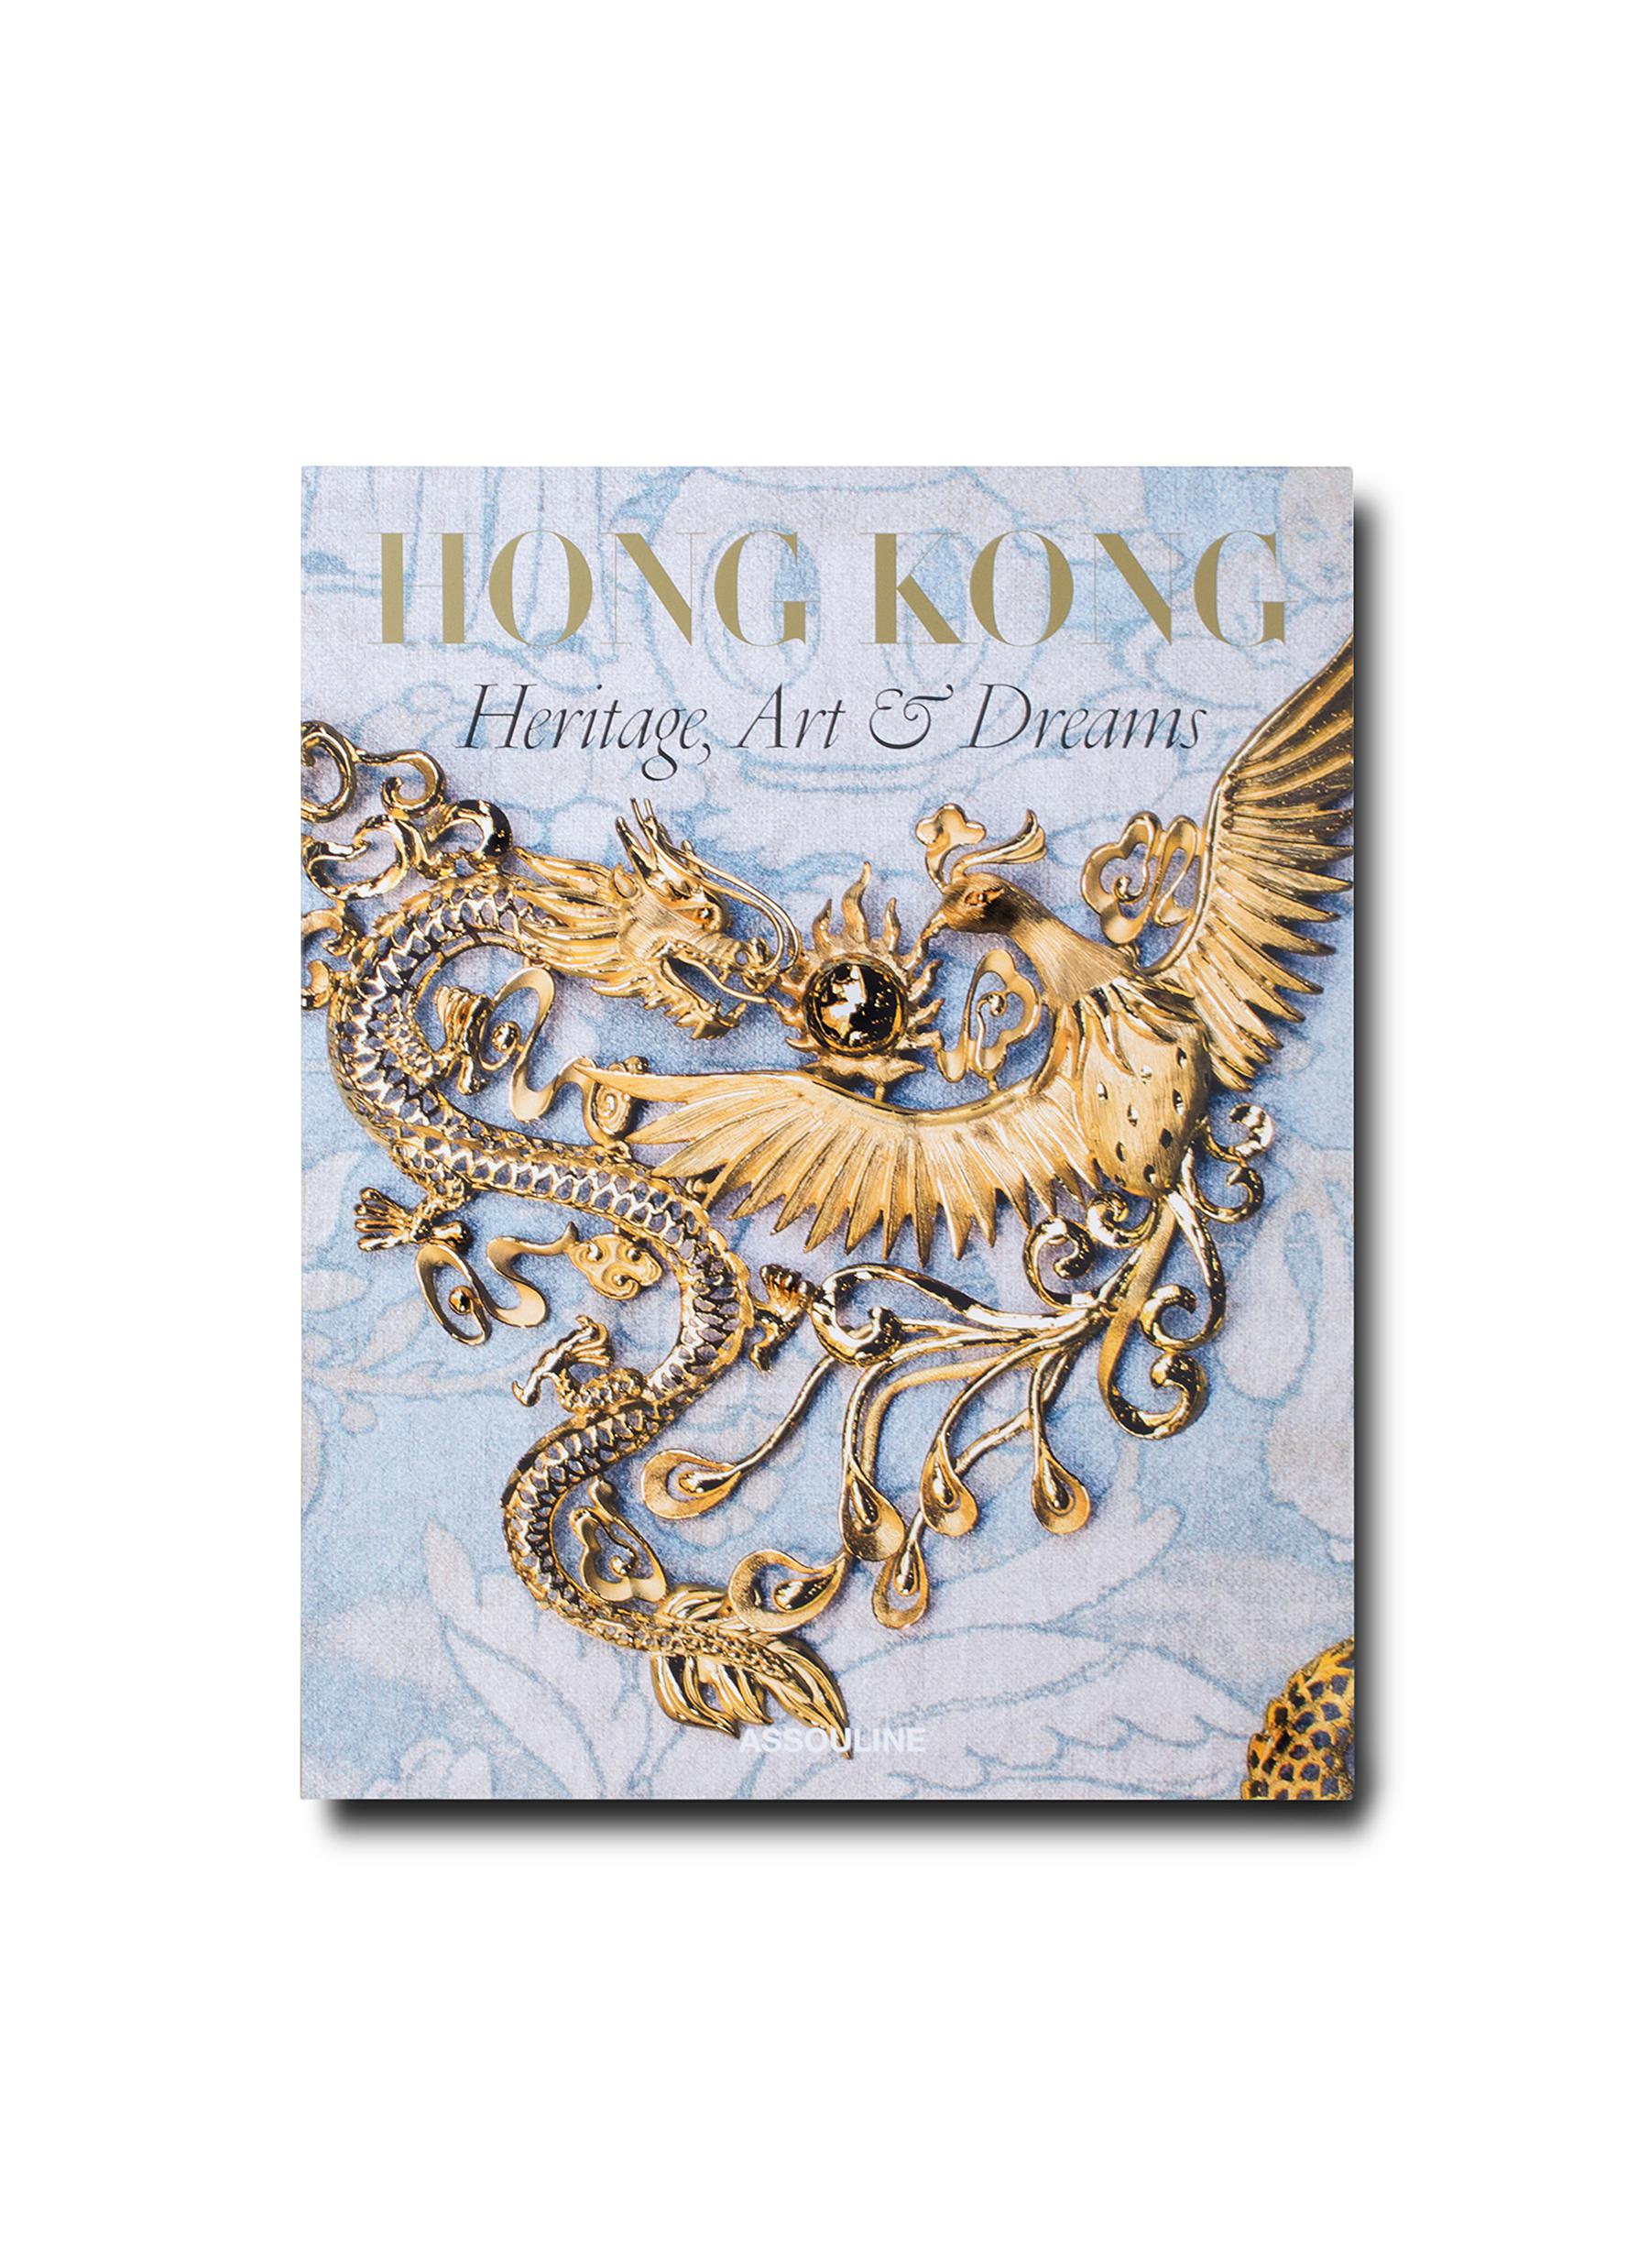 HONG KONG: HERITAGE, ART & DREAMS